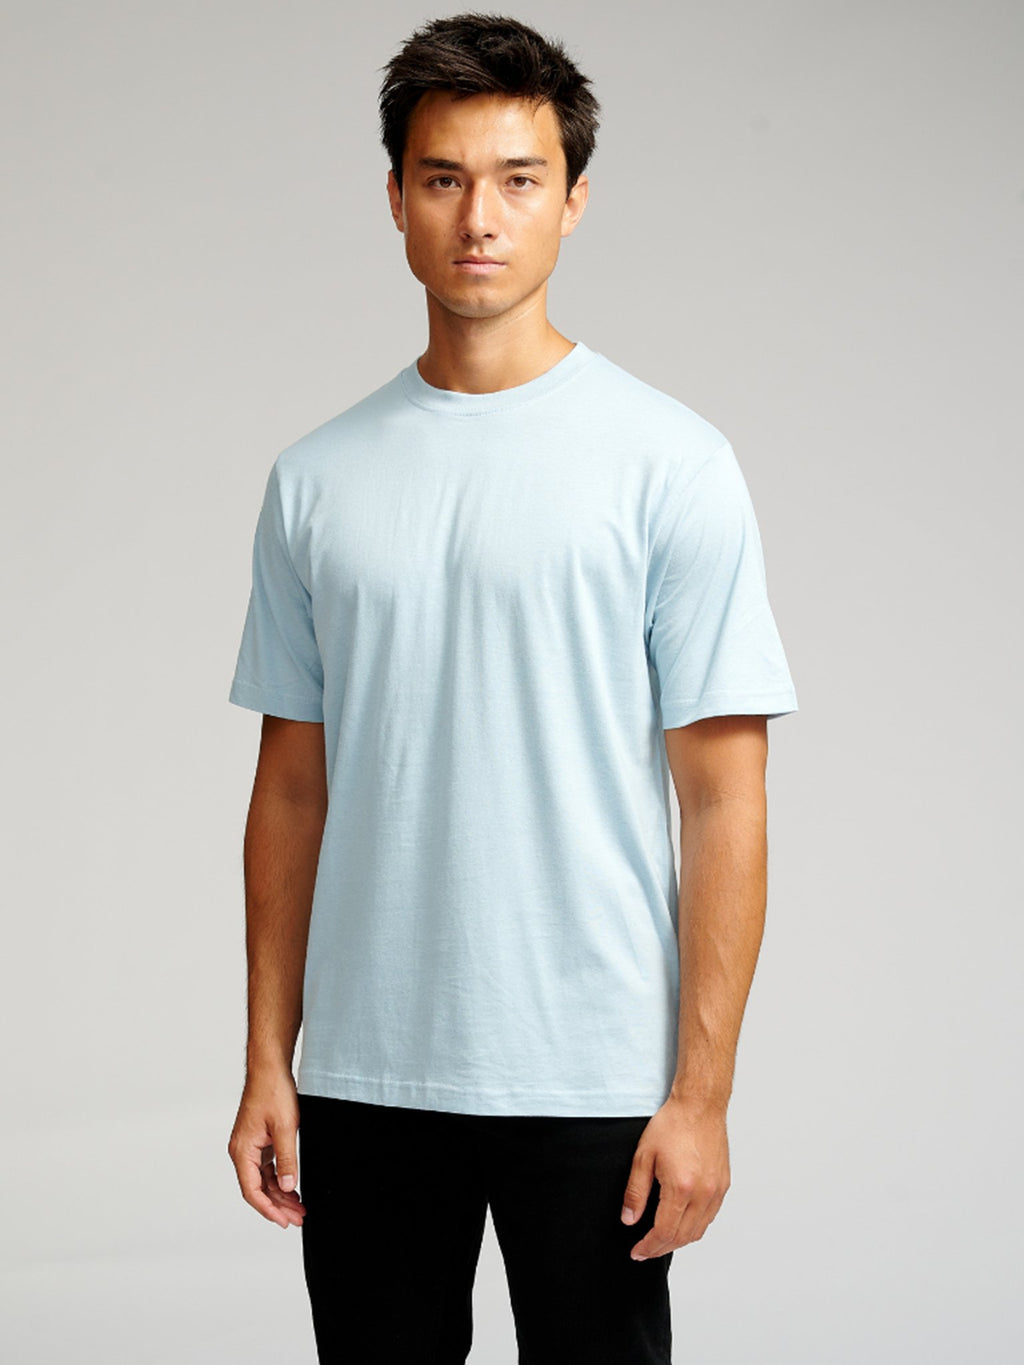 Übergroßes T -Shirt - Himmelblau